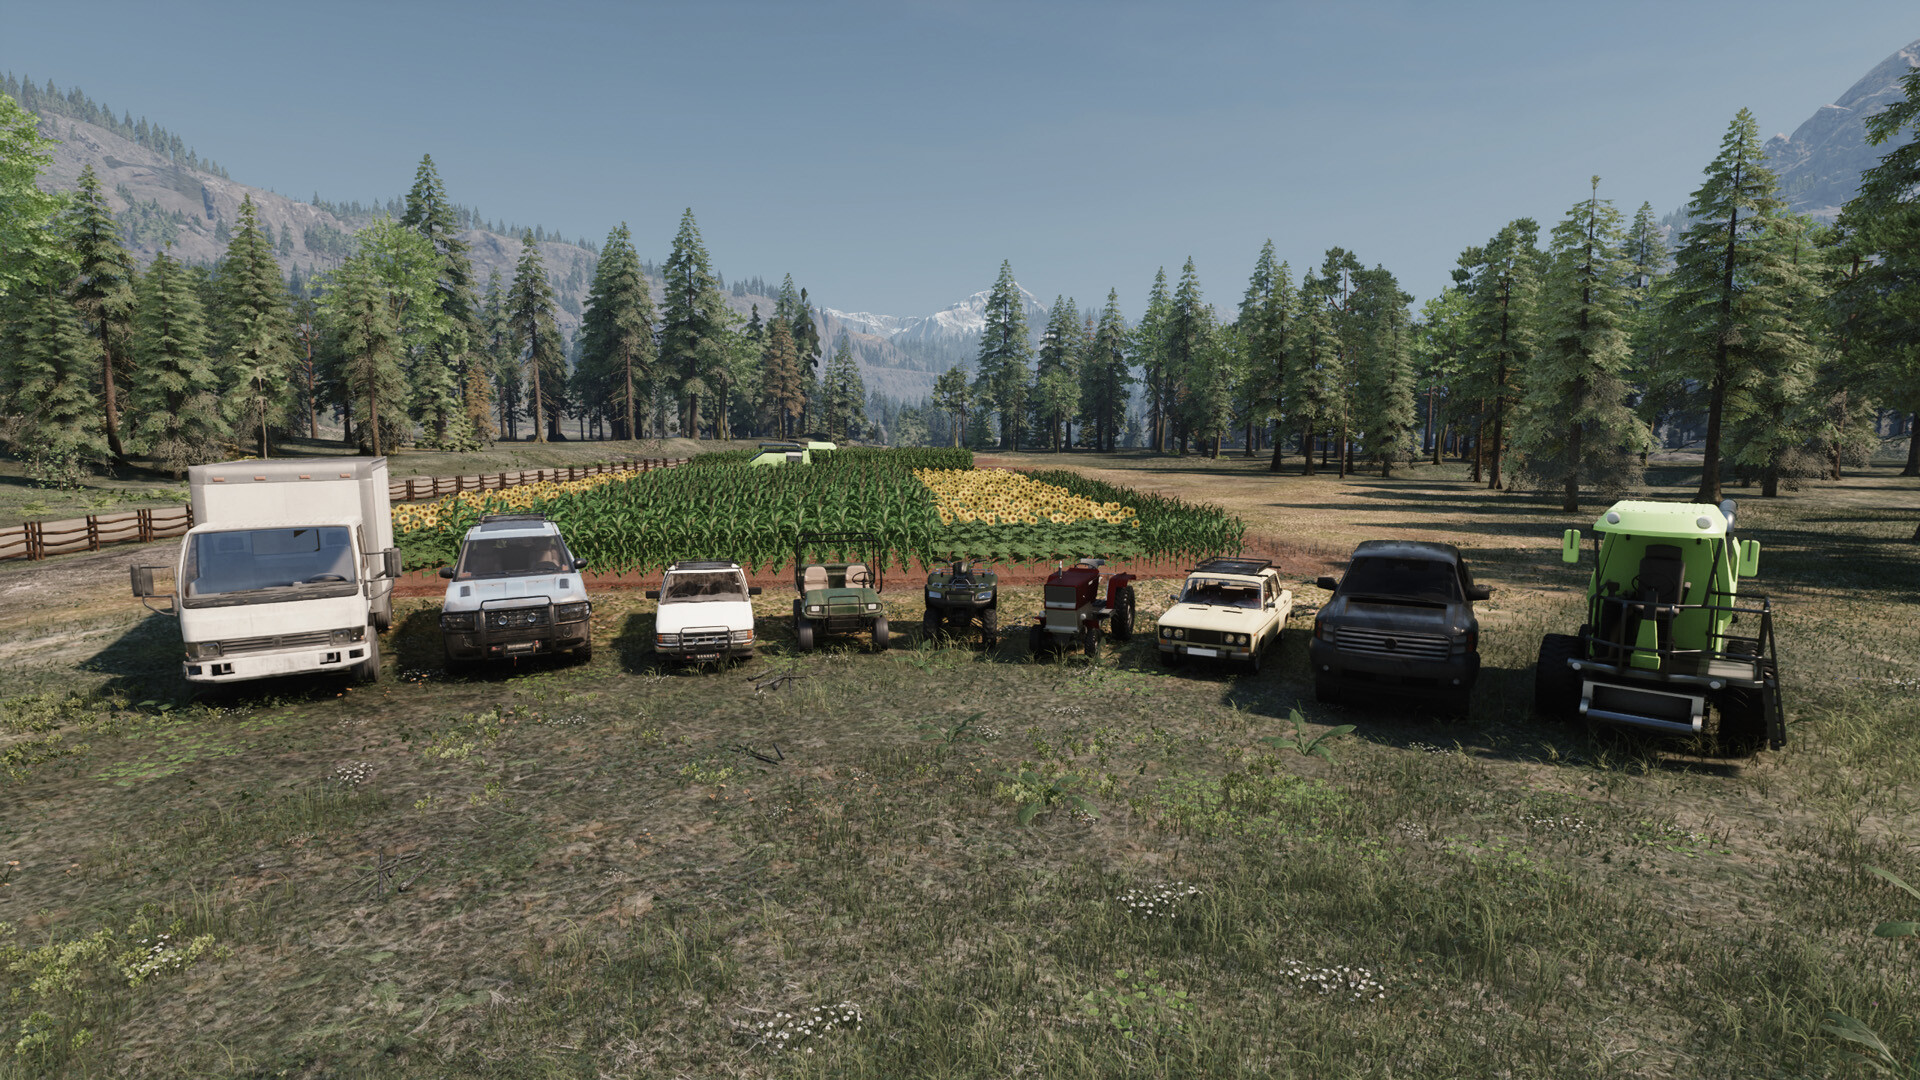 Ranch Simulator - Build, Farm, Hunt. - Day 6 